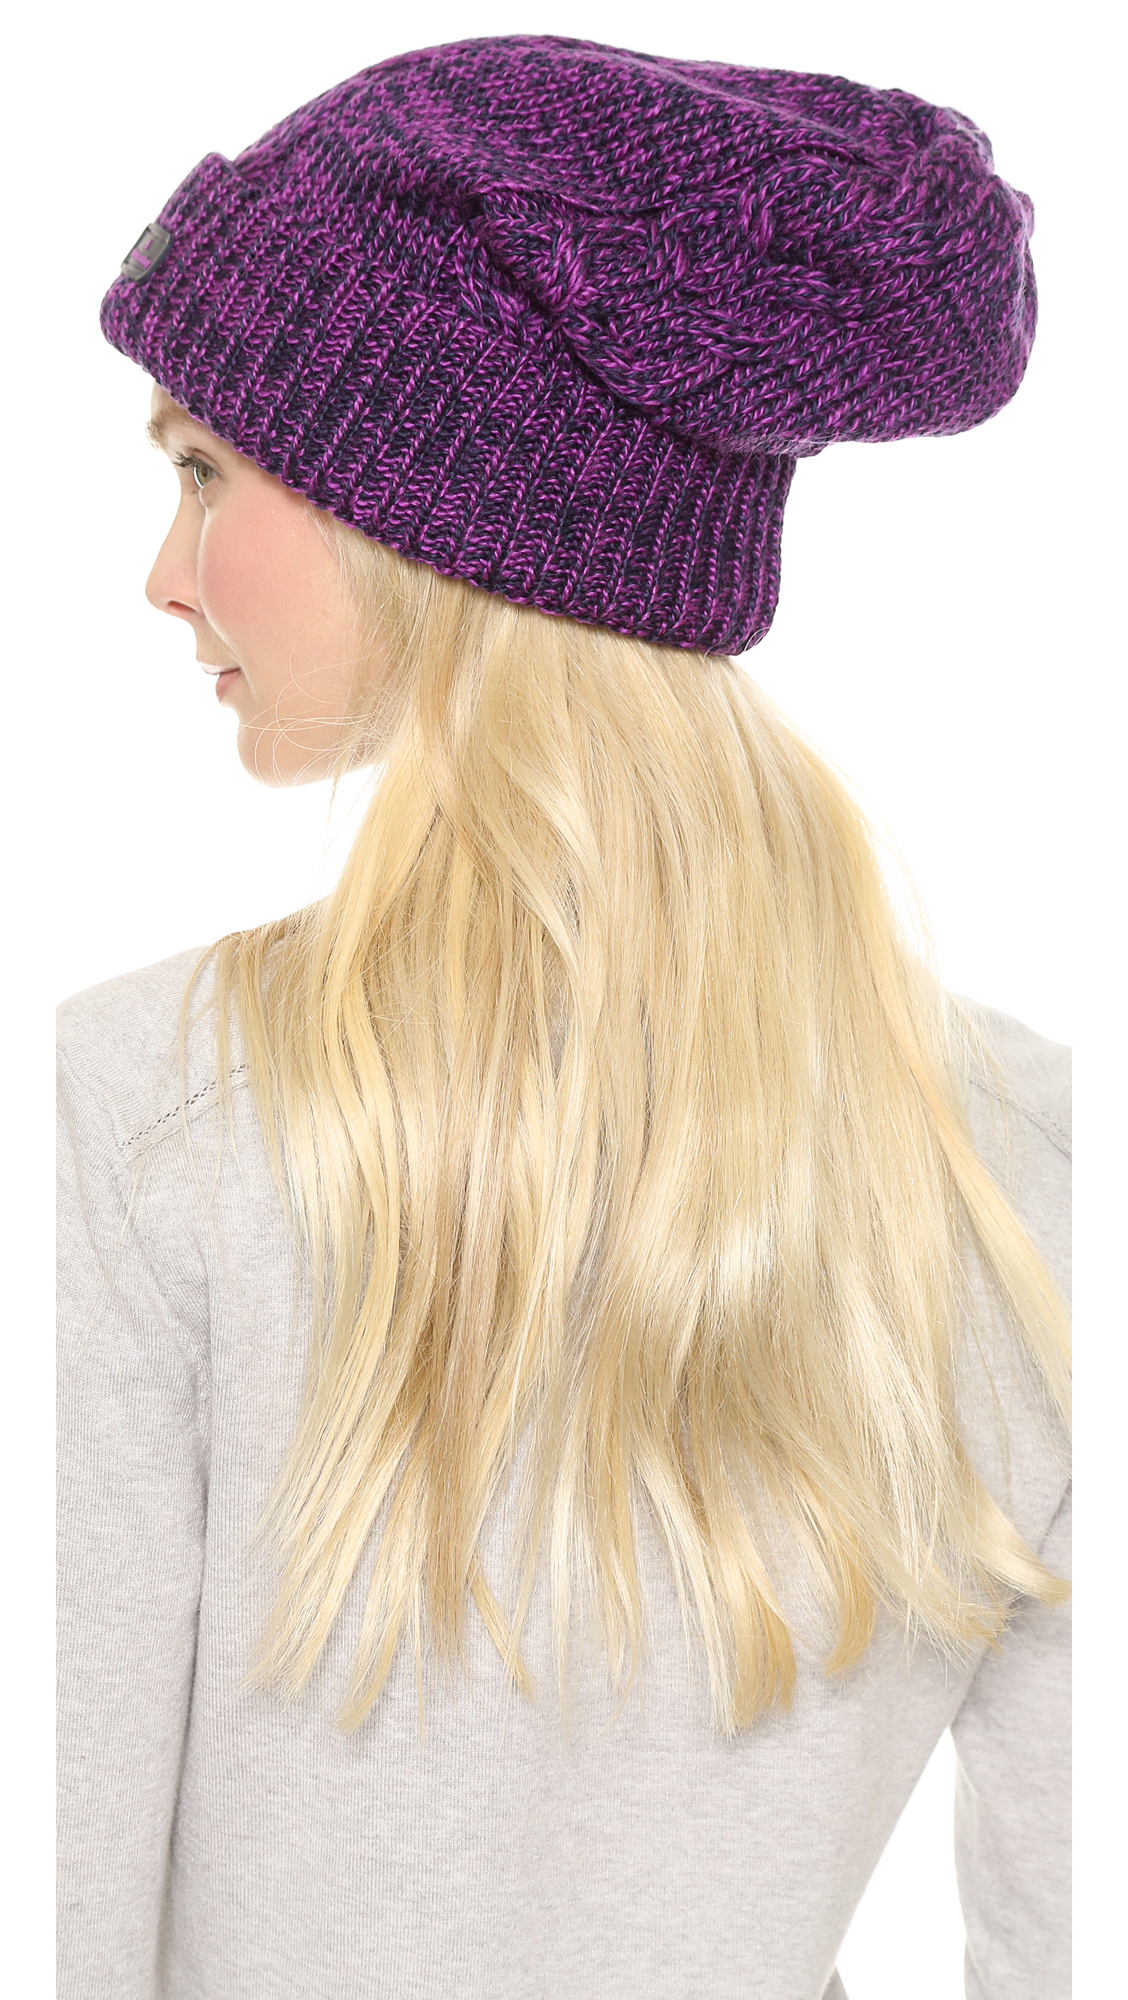 adidas By Stella McCartney Wintersport Ski Hat - Indigo/pop Purple